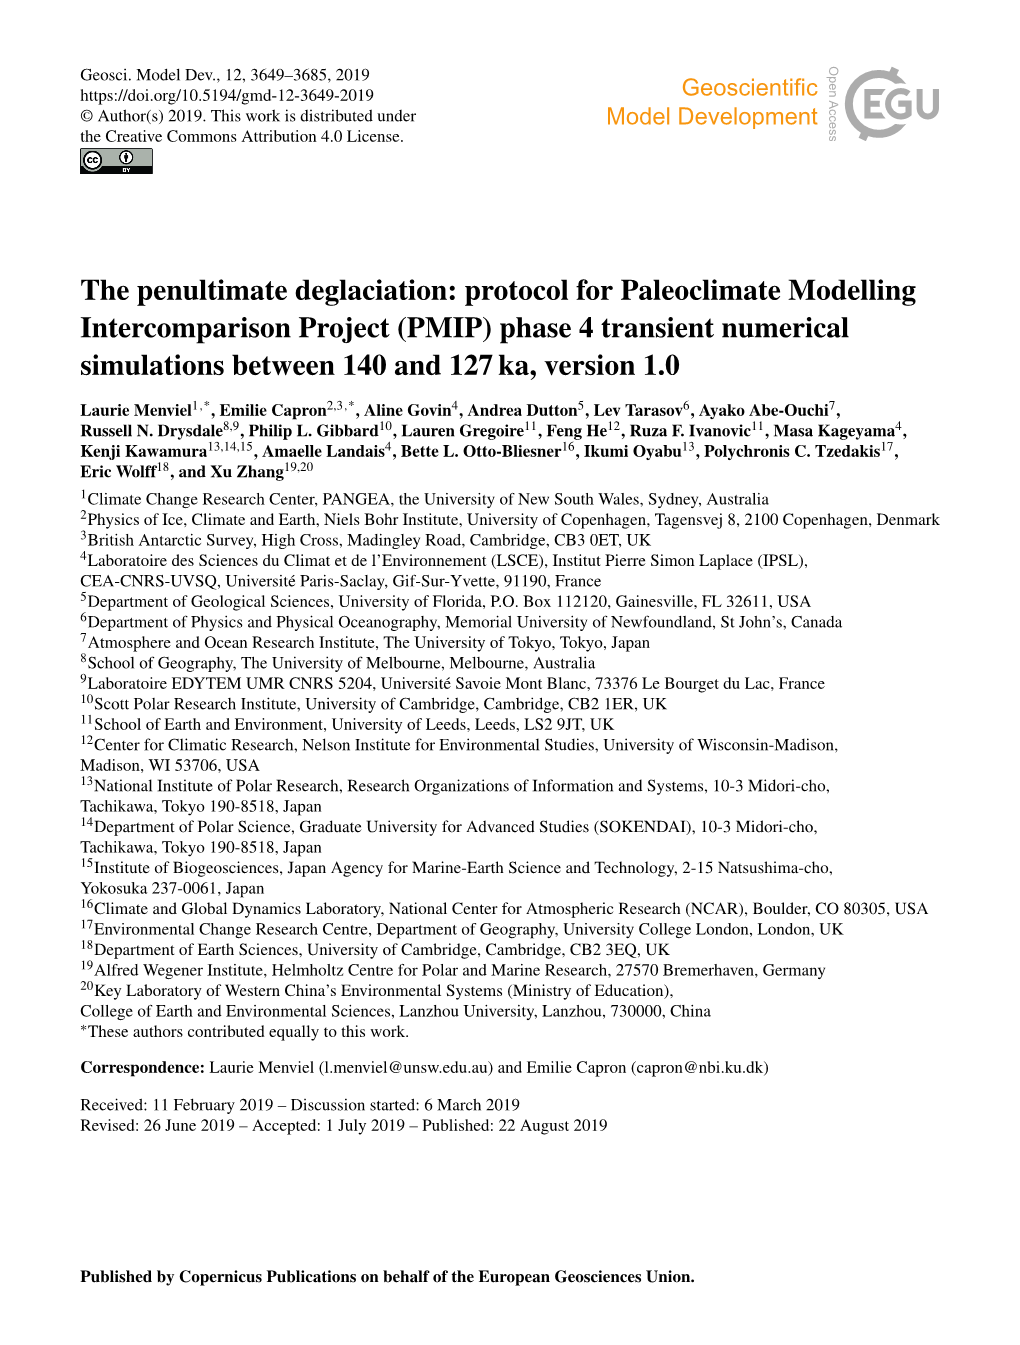 The Penultimate Deglaciation: Protocol for Paleoclimate Modelling